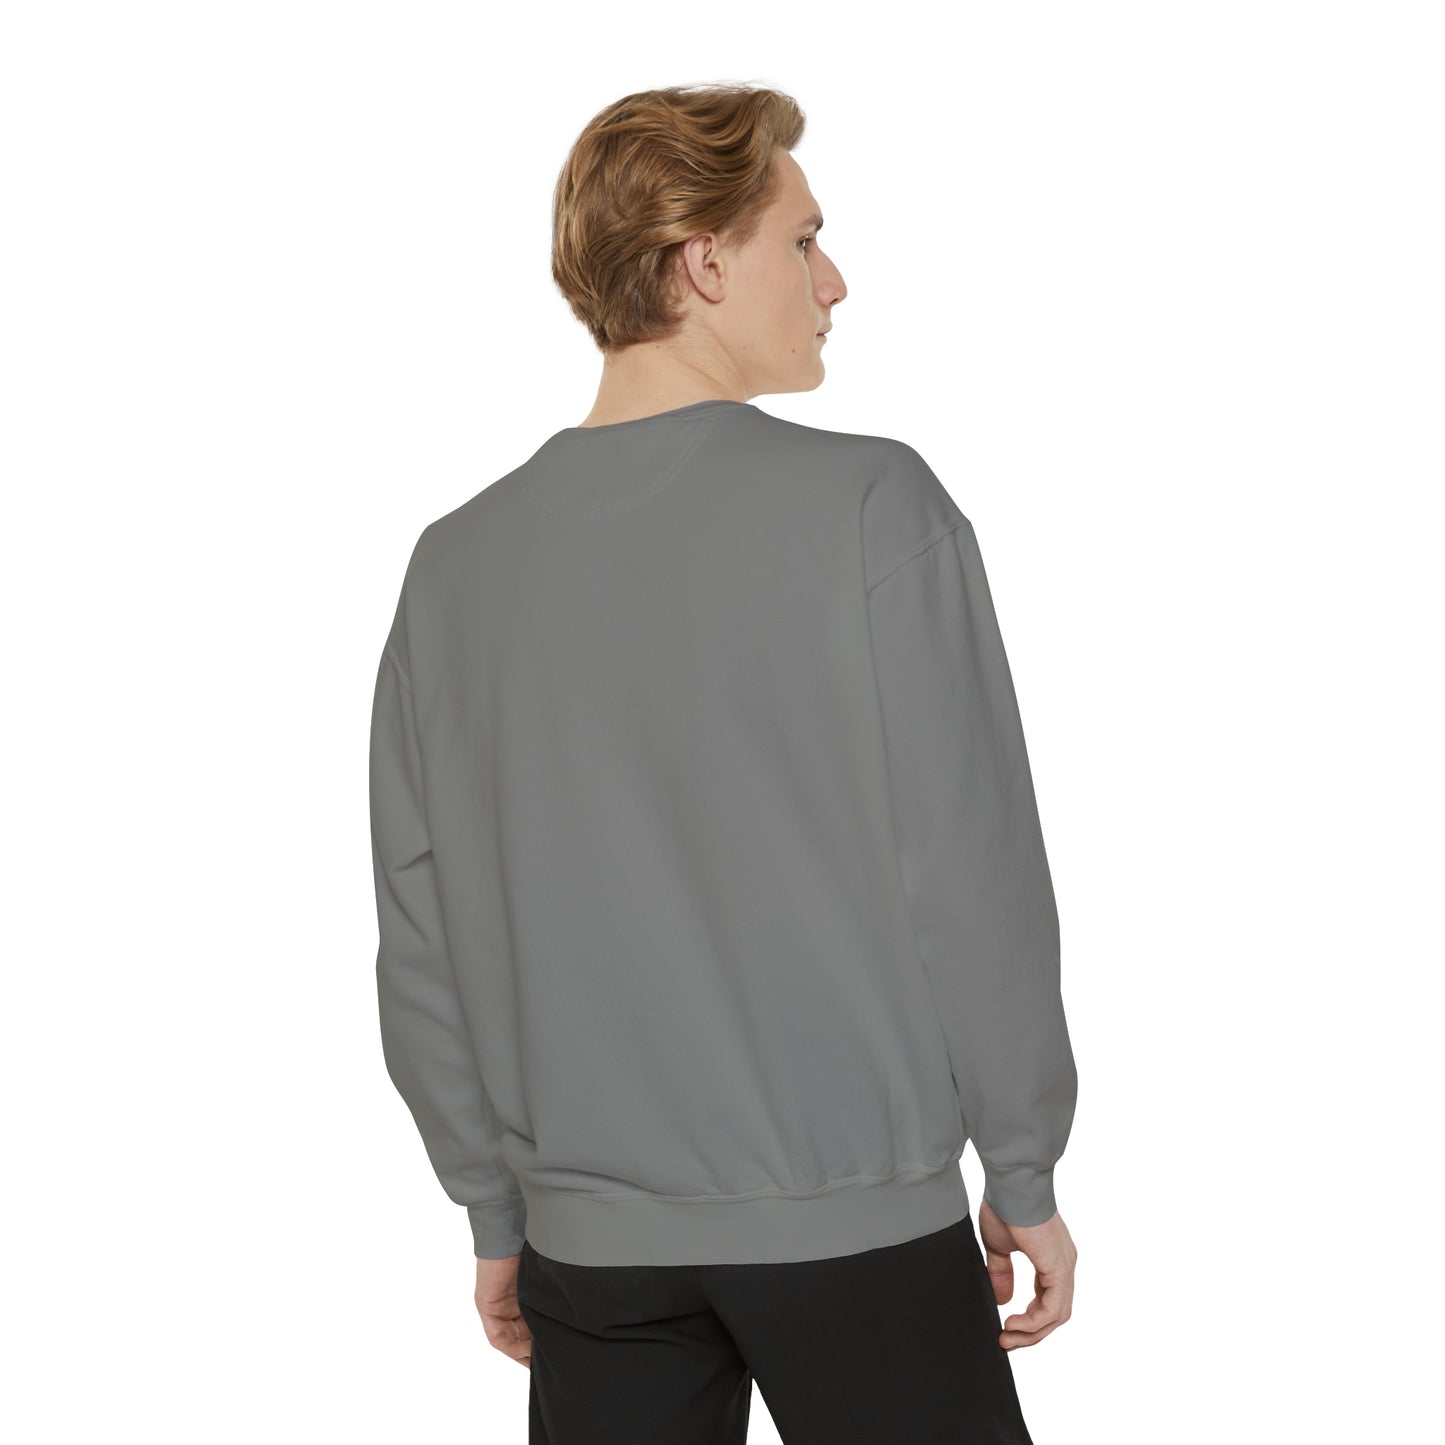 COMFORT COLOR Gordo Heart Unisex Garment-Dyed Sweatshirt